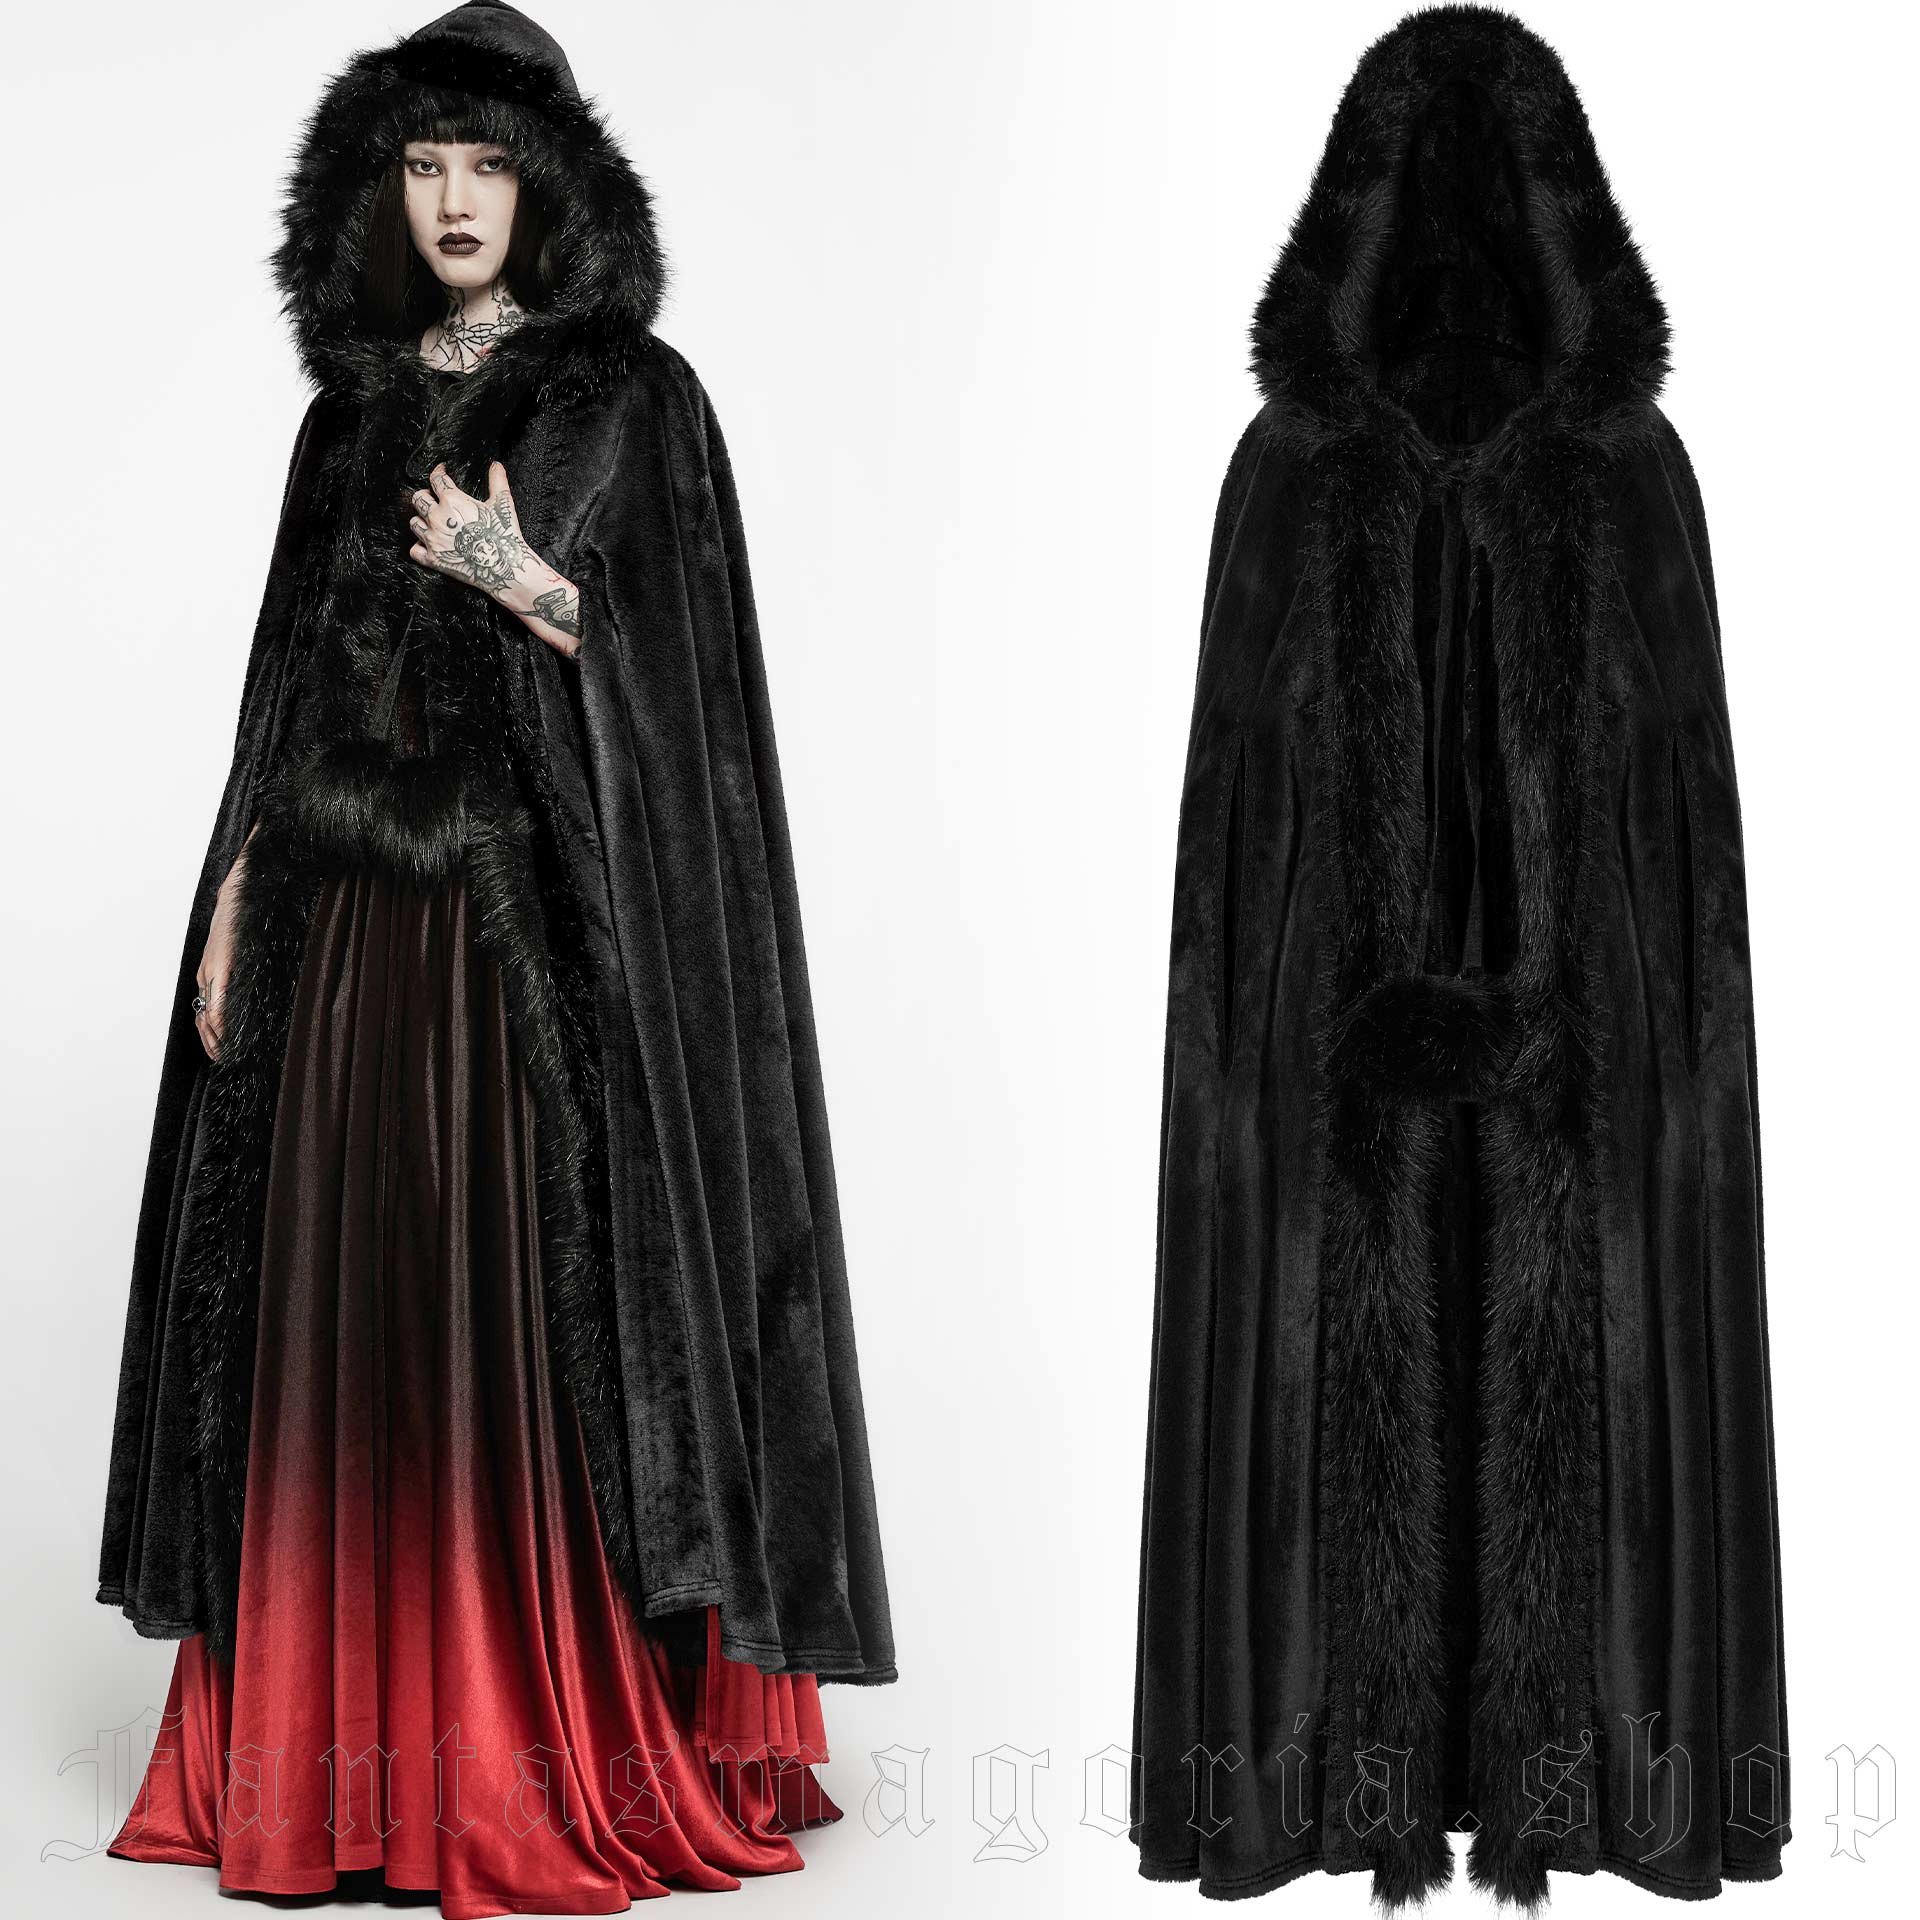 Women`s Victorian Gothic black faux fur cloak with a hood.